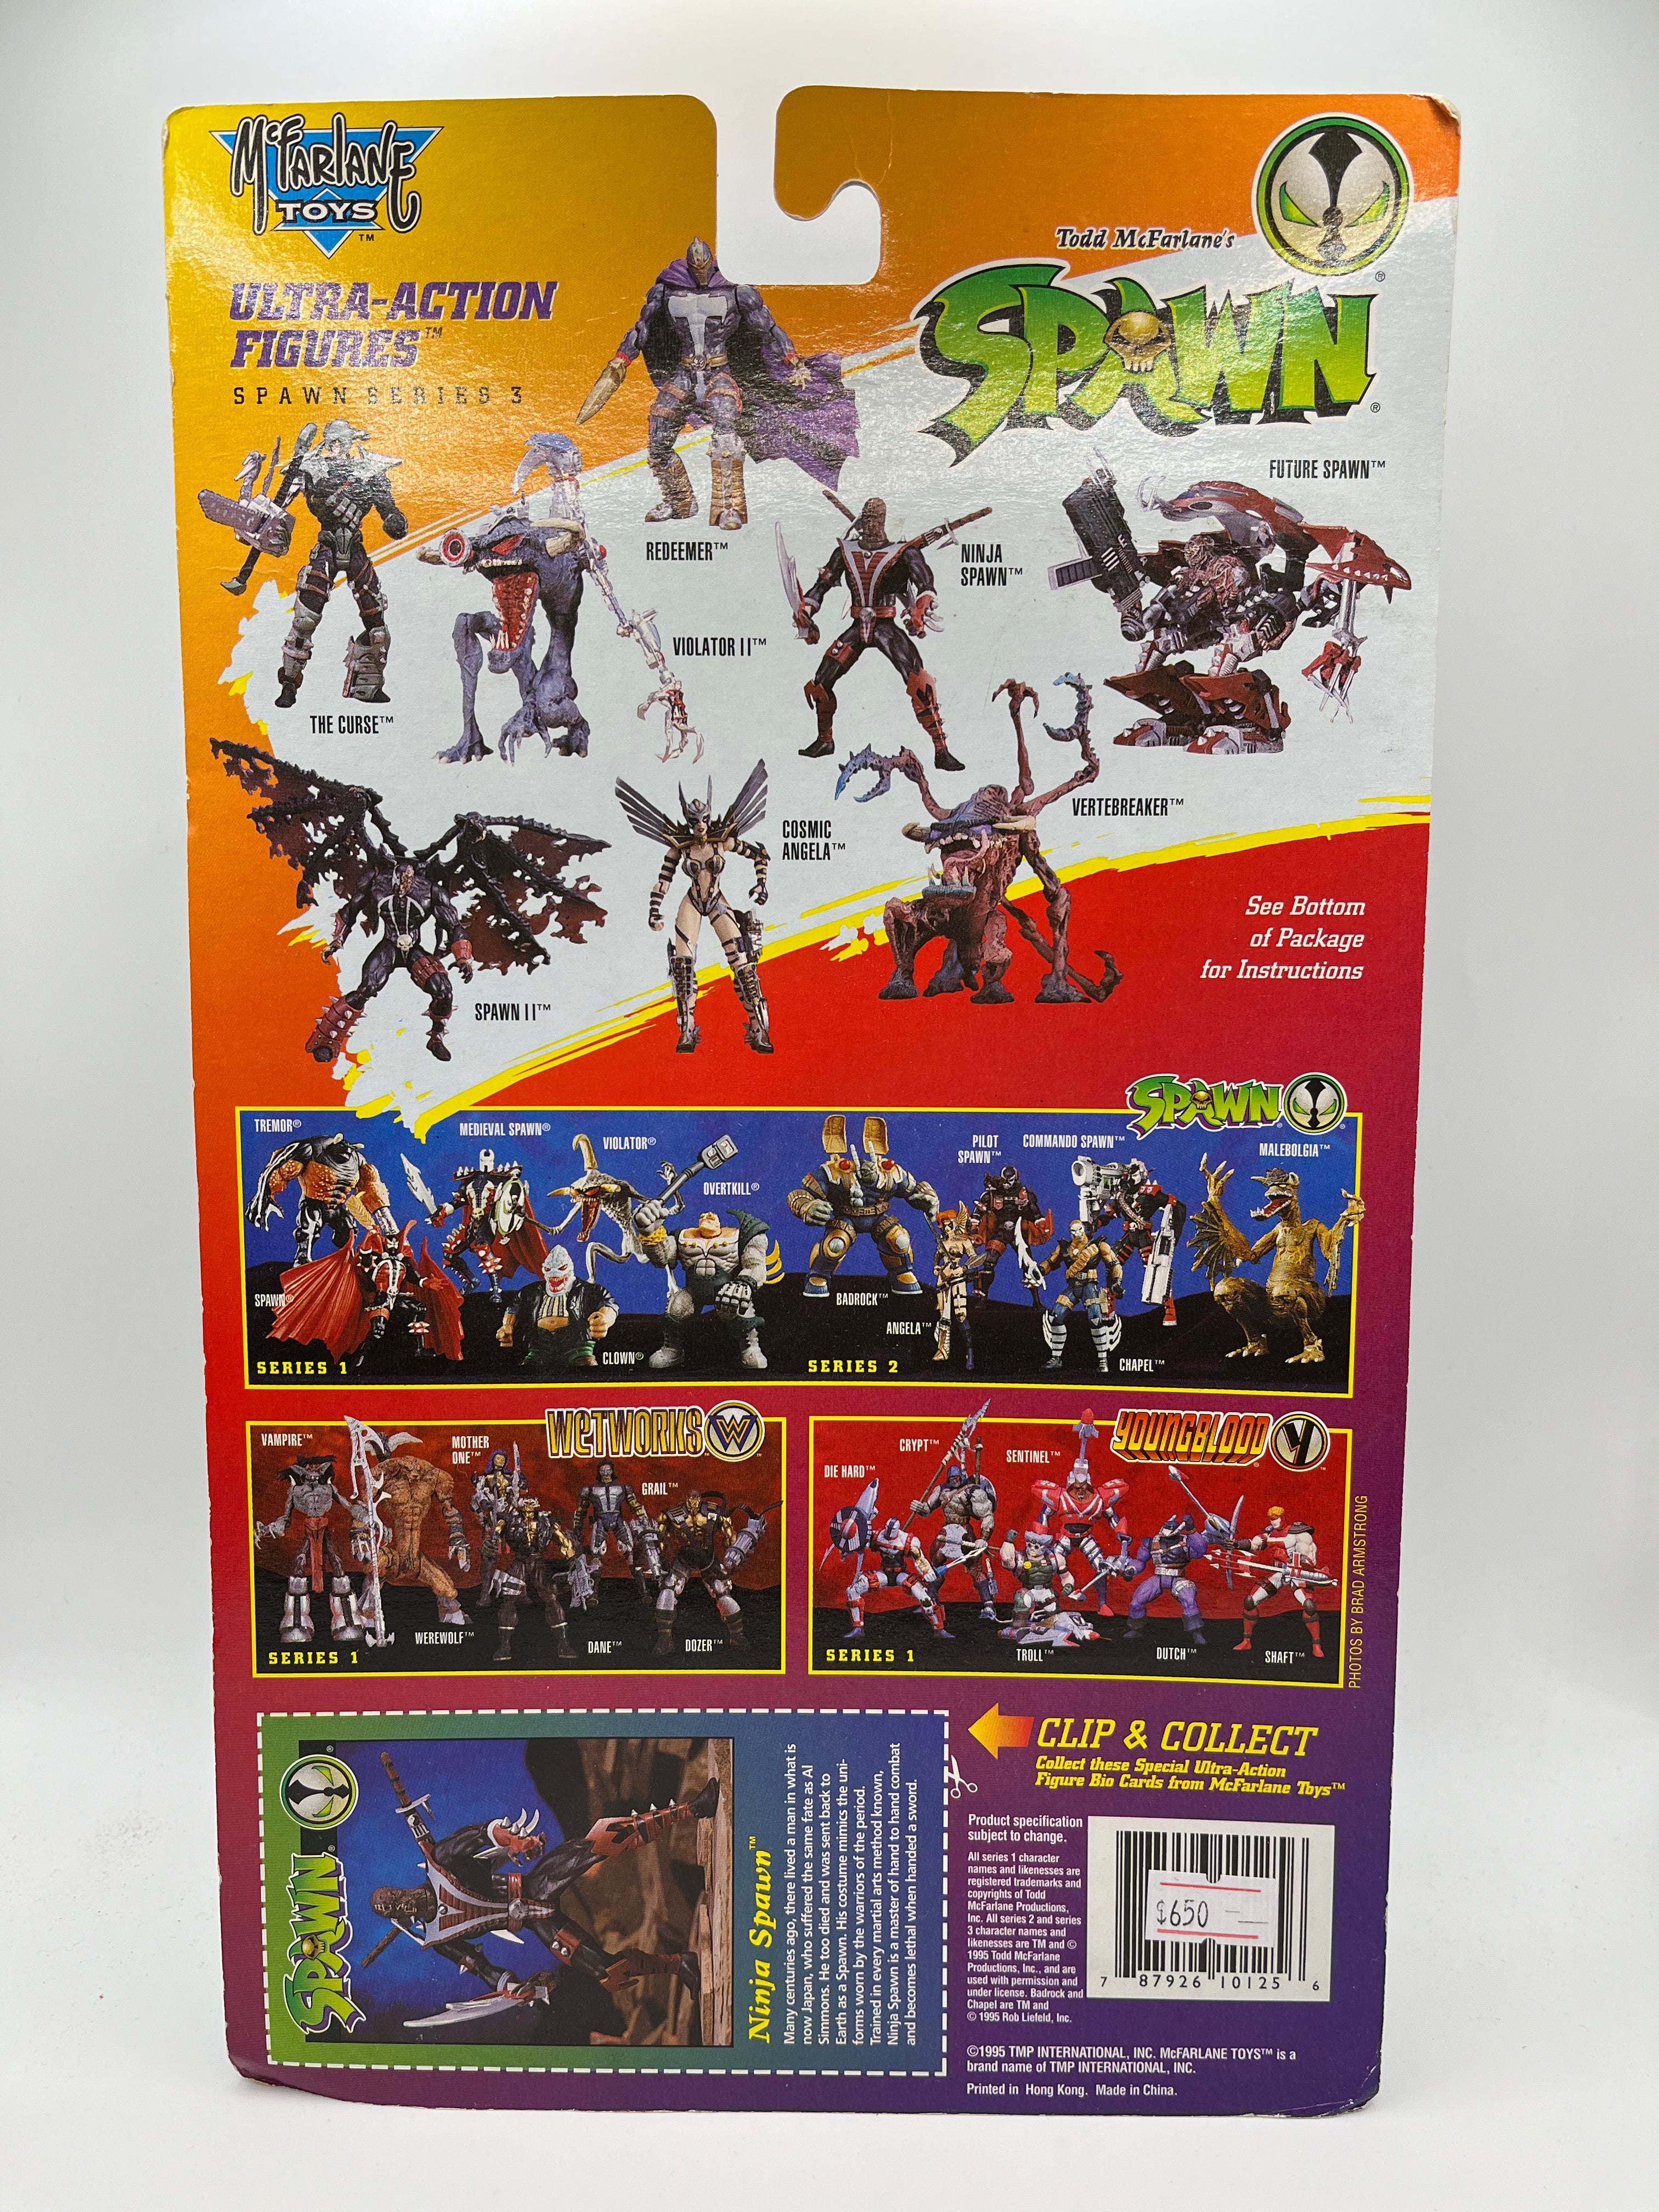 Todd McFarlane’s Spawn Ninja Spawn Ultra-Action Figures McFarlane